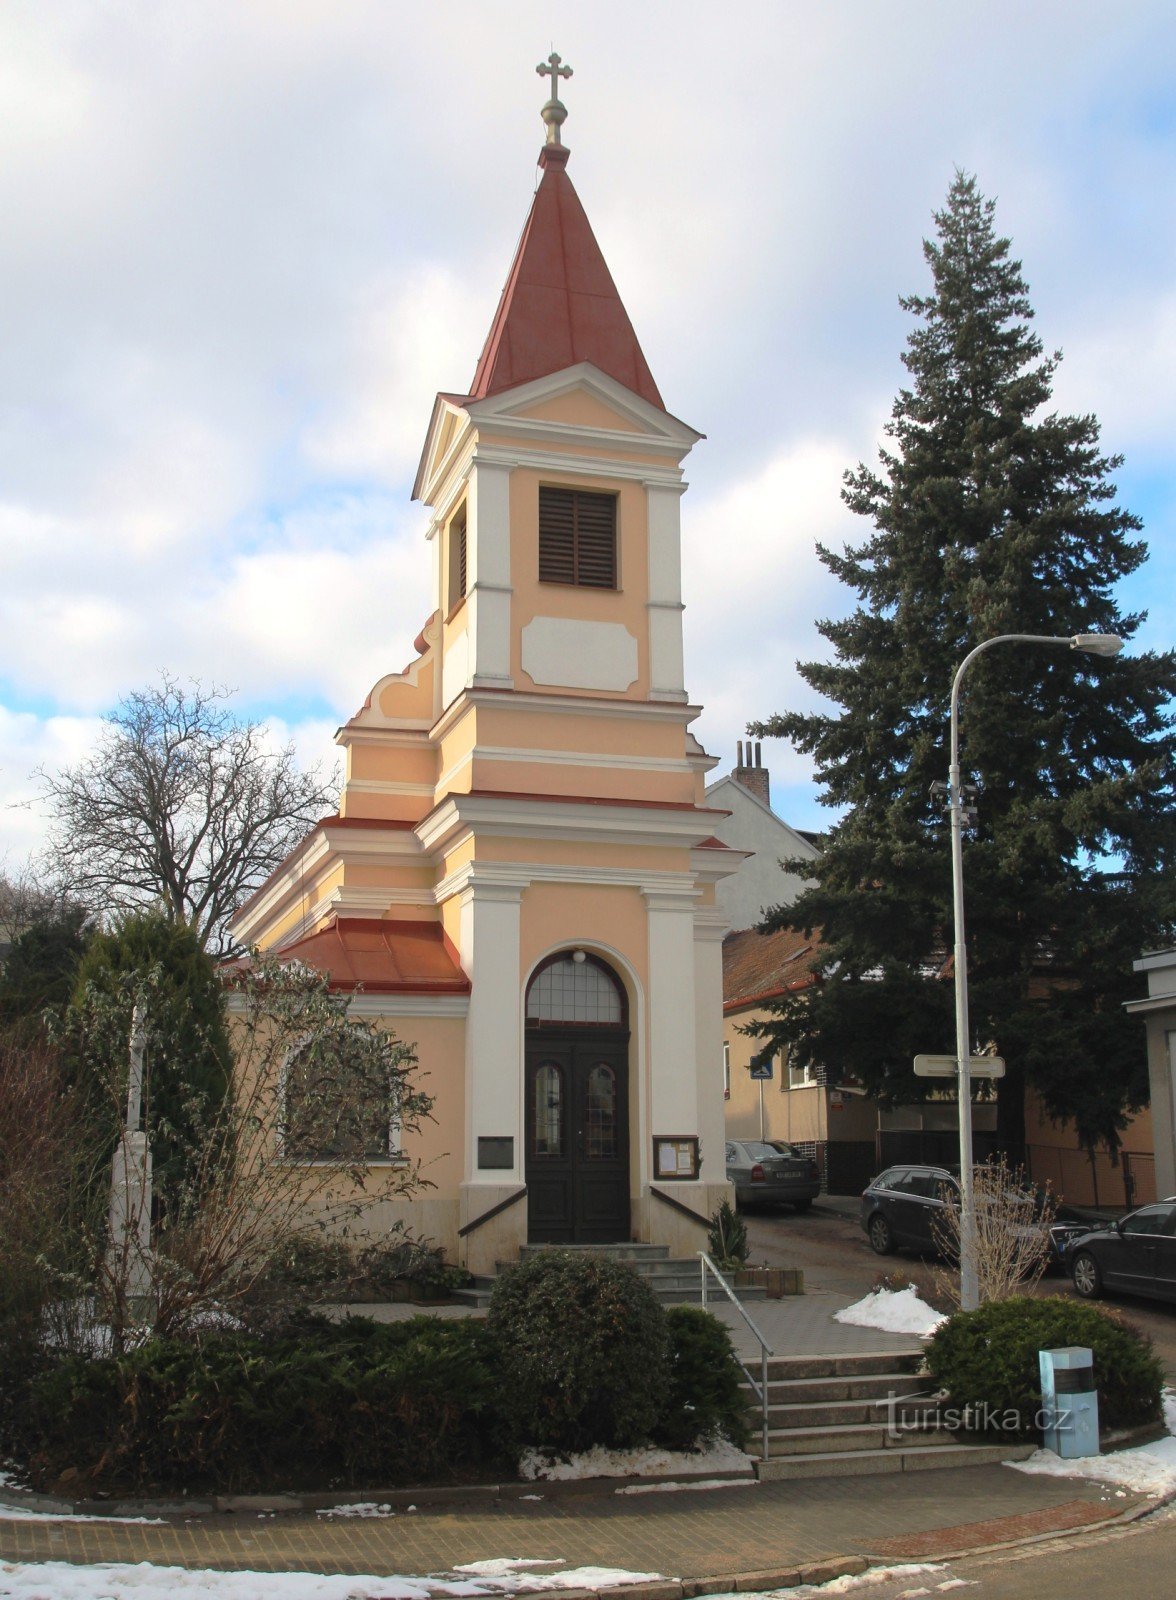 Brno-Kohoutovice - chapel of St. Families